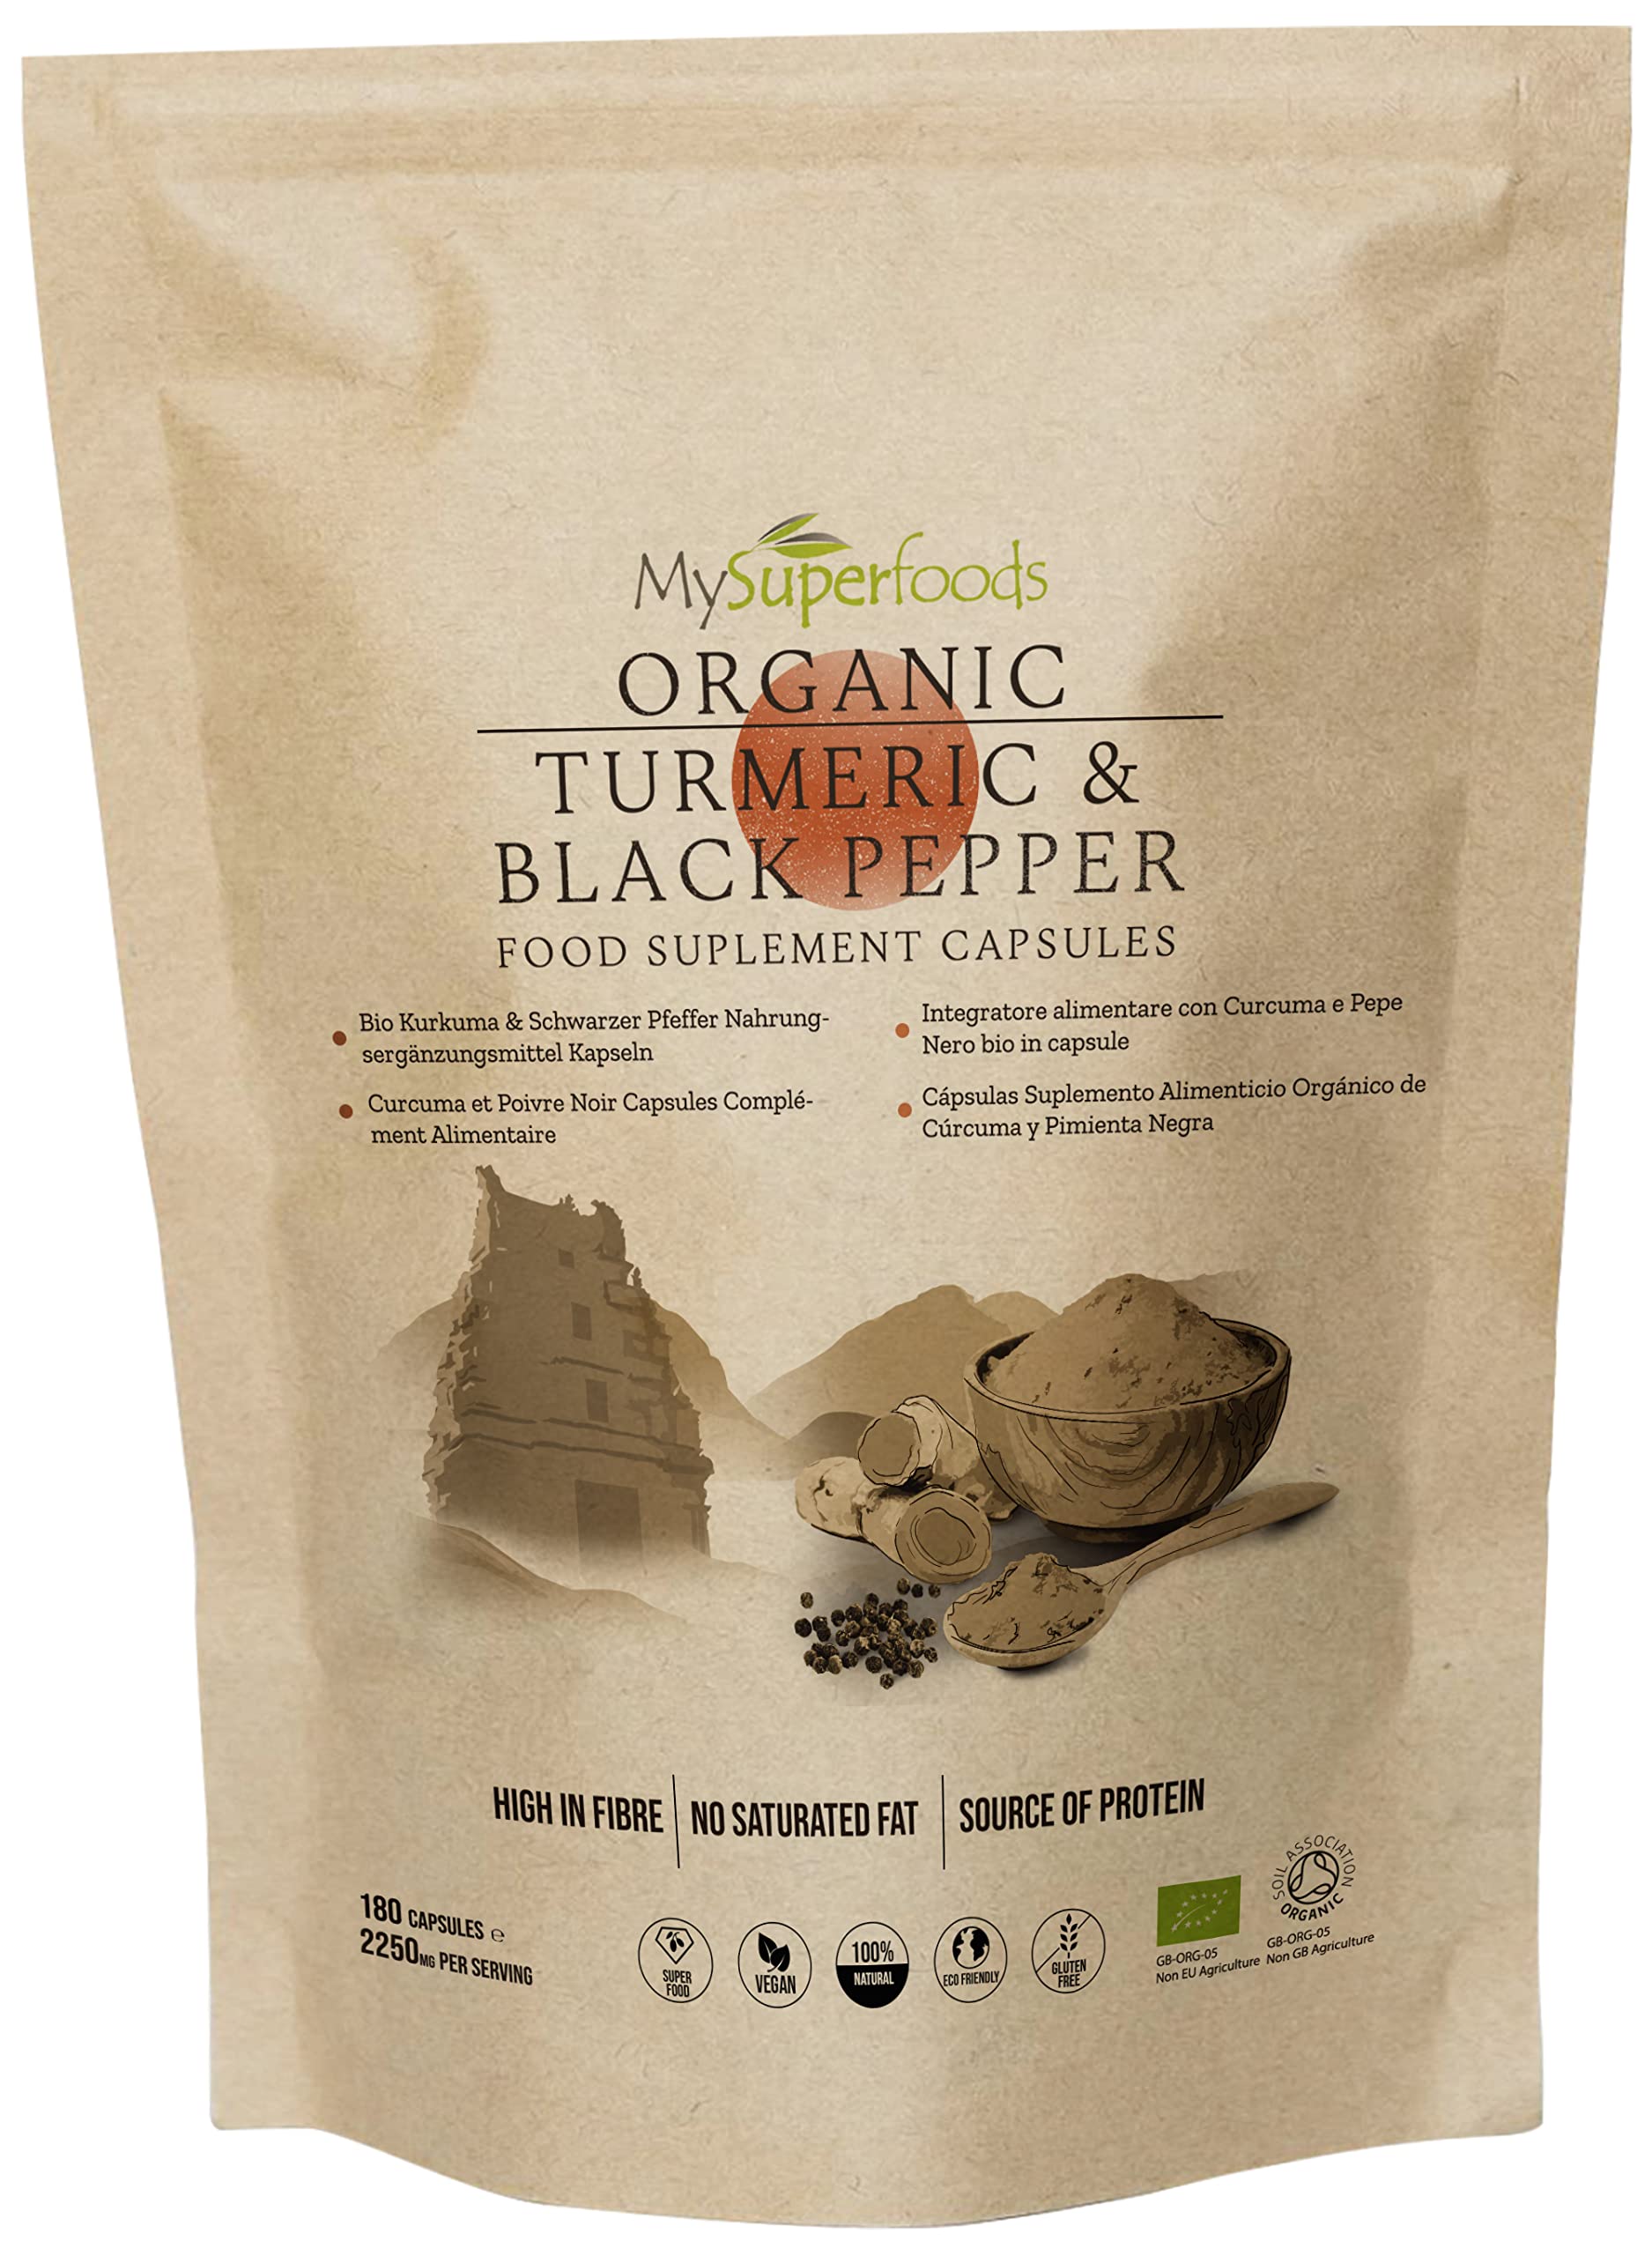 Organic Turmeric & Black Pepper Powder